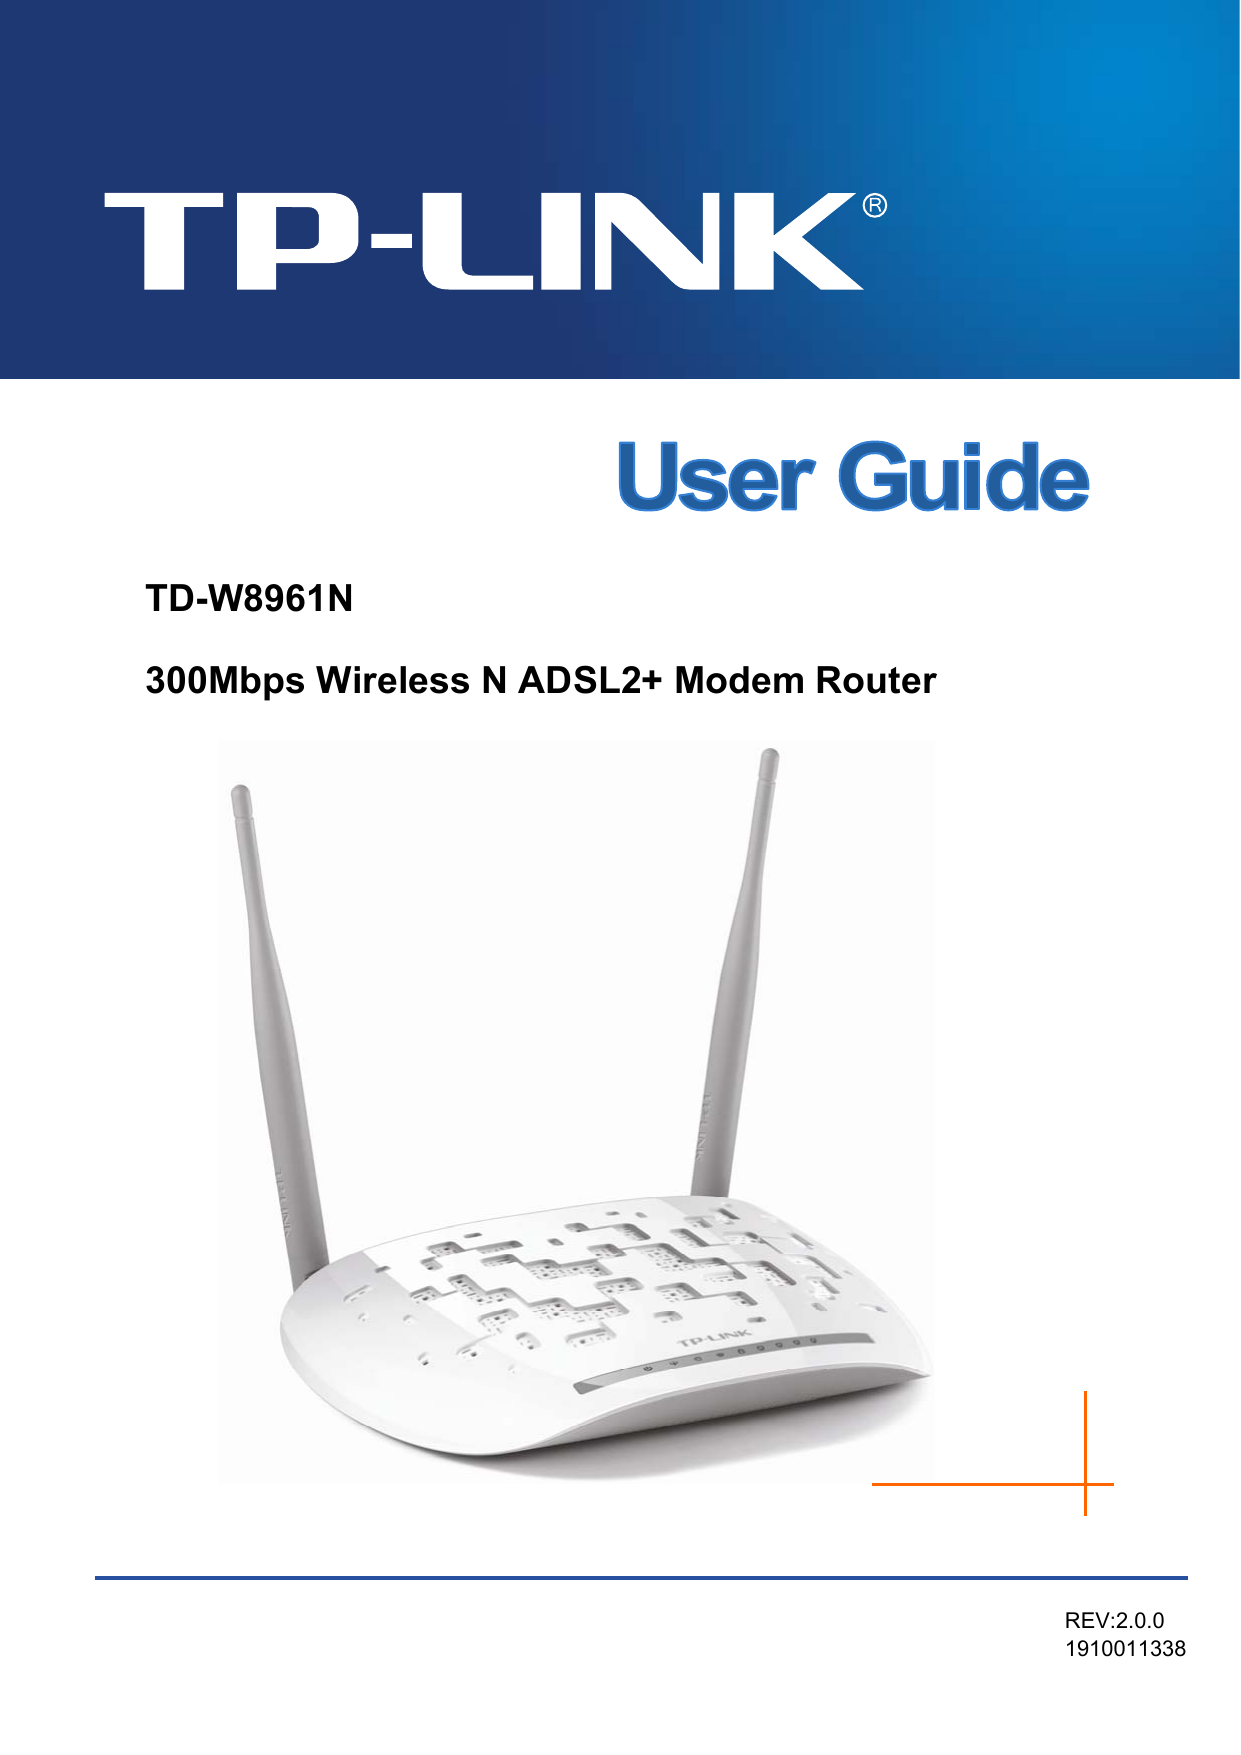   TD-W8961N 300Mbps Wireless N ADSL2+ Modem Router  REV:2.0.0 1910011338 